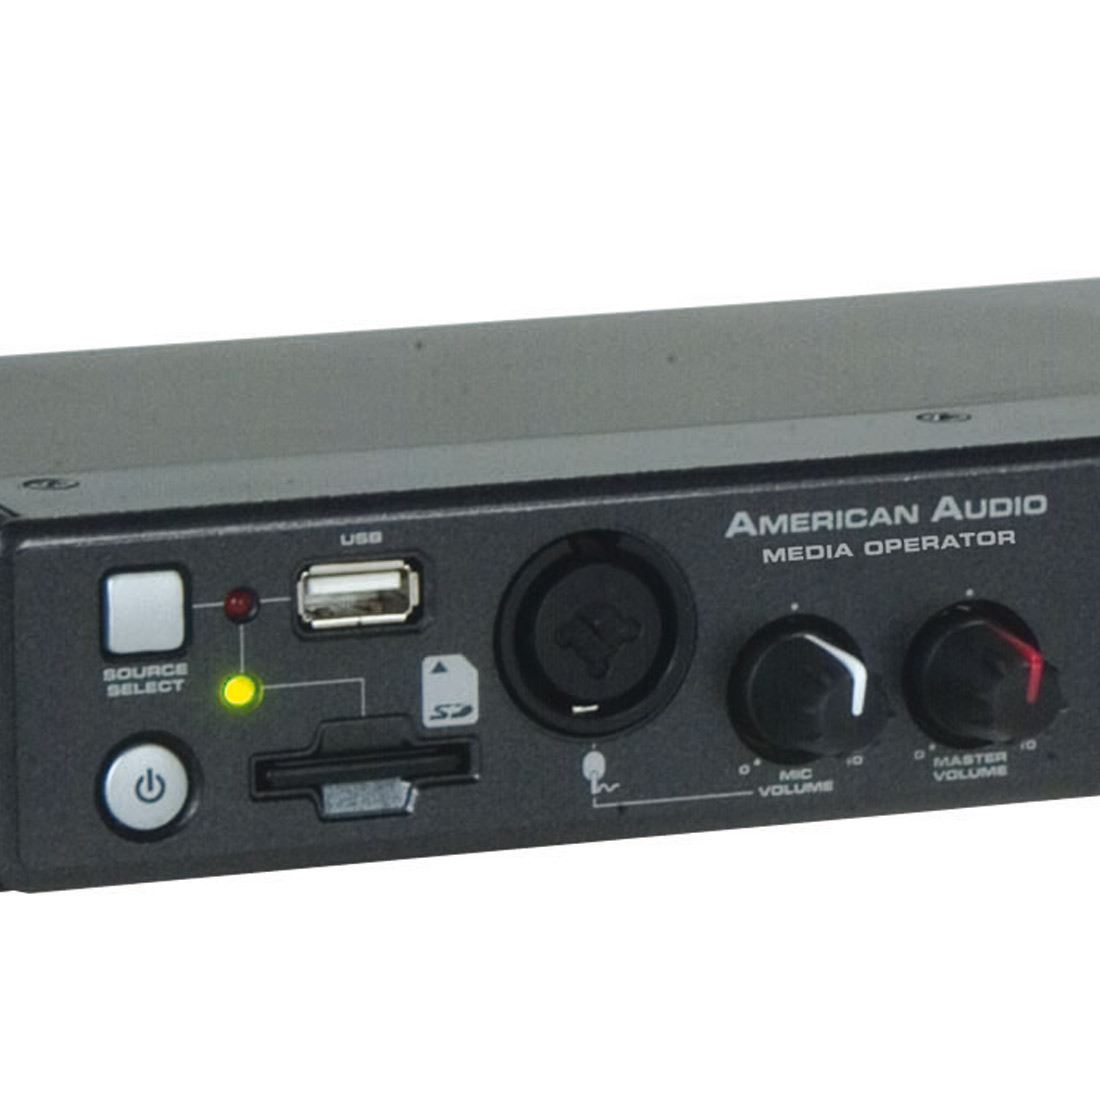 American Audio Media Operator (Buttons)